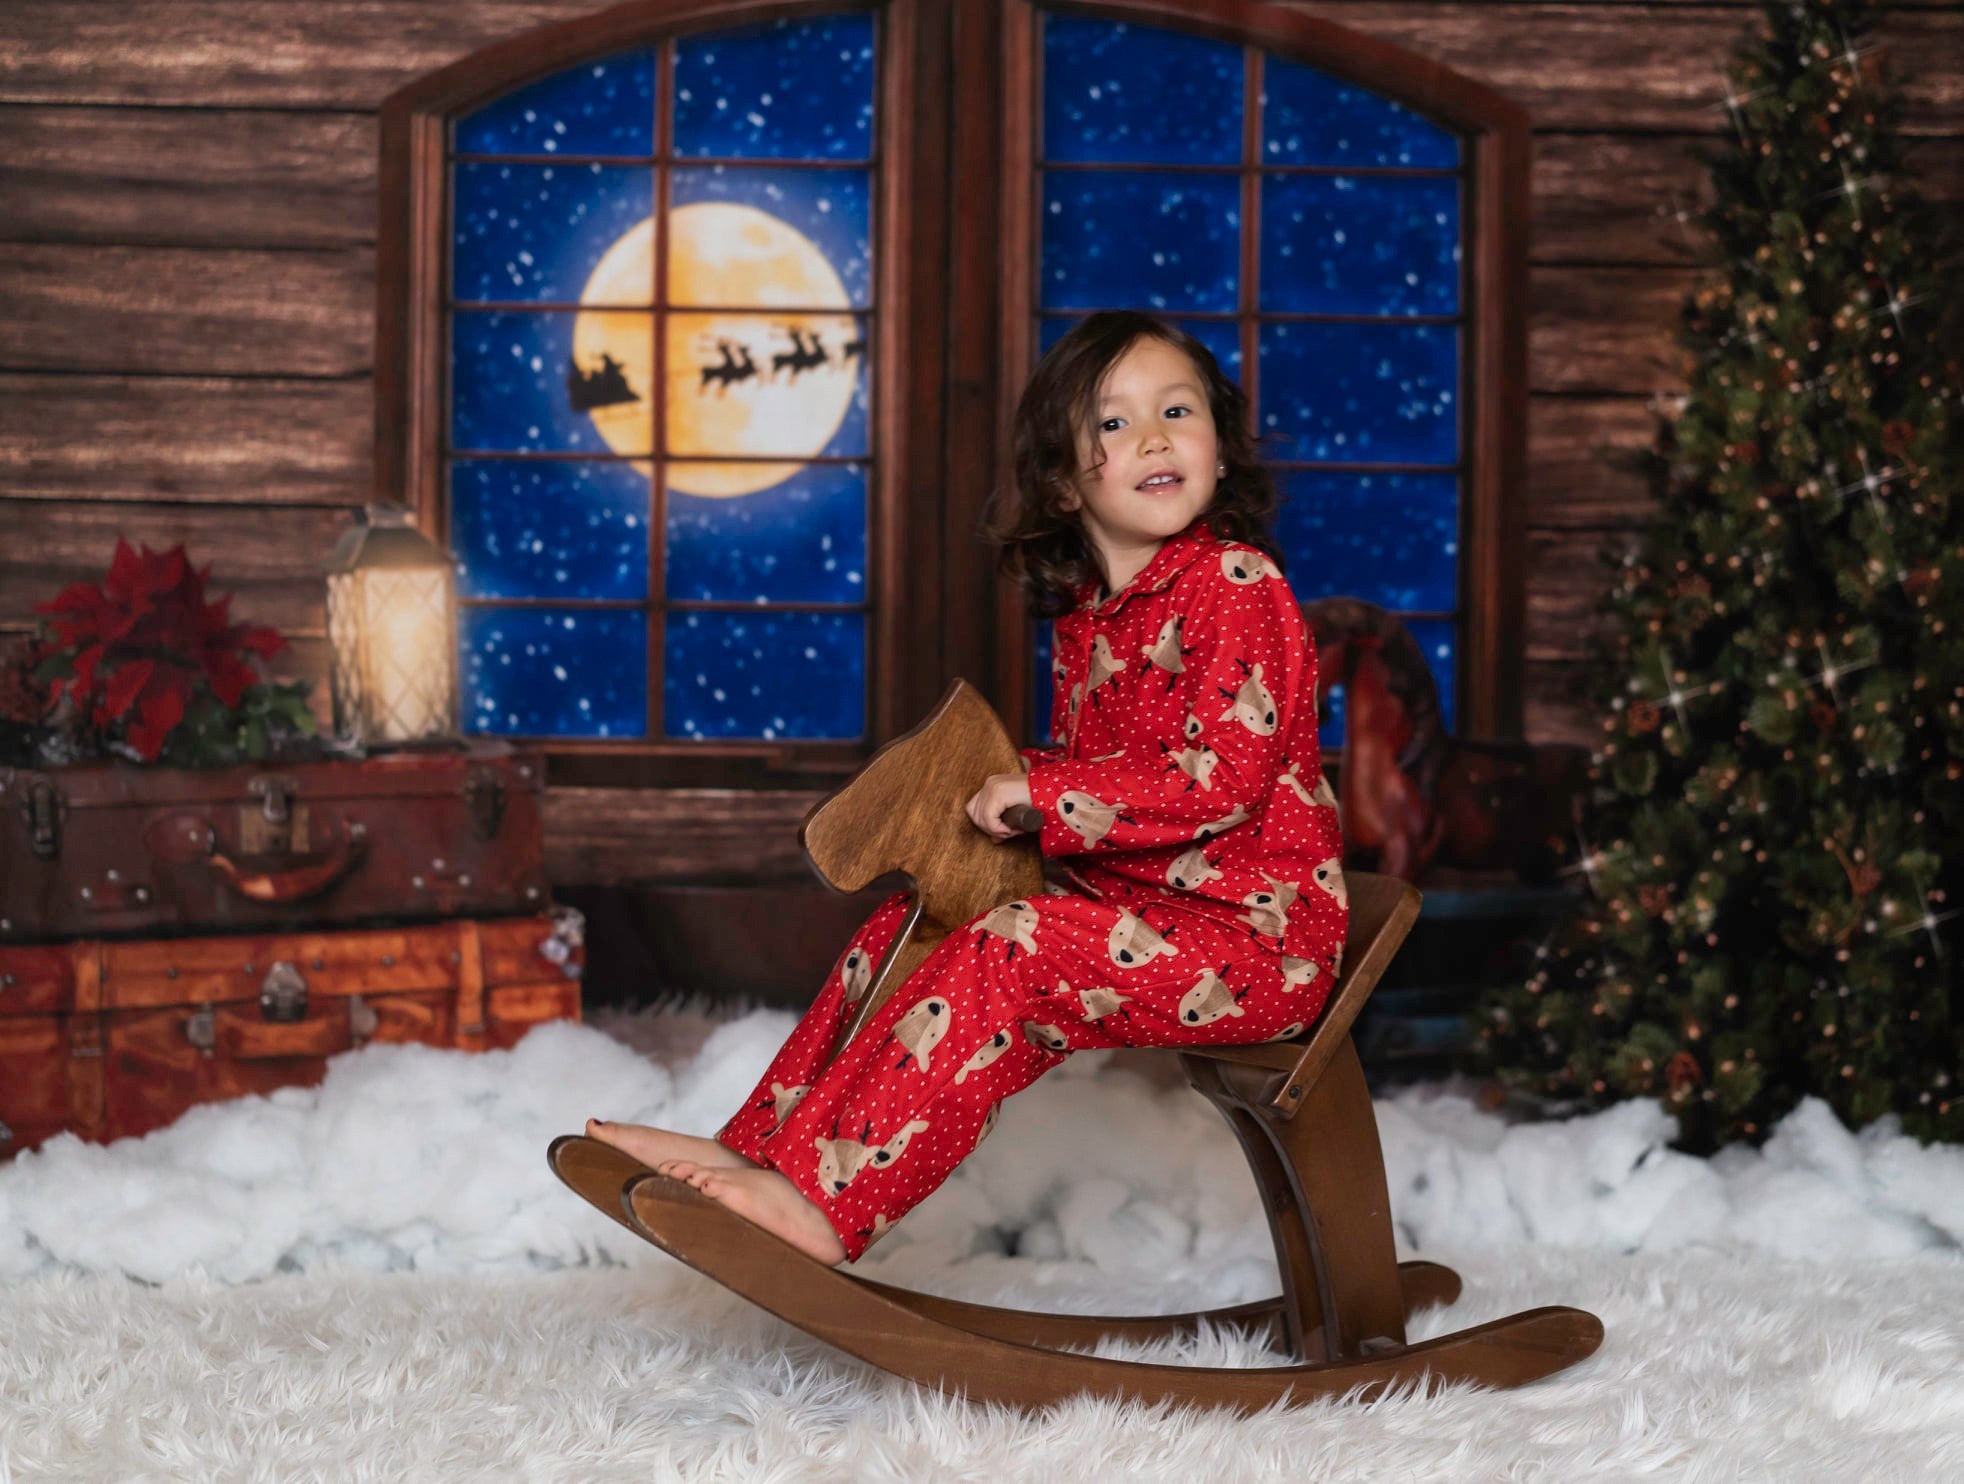 Kate Xmas Tree Santa Backdrop for Photography Designed by Lisa Granden